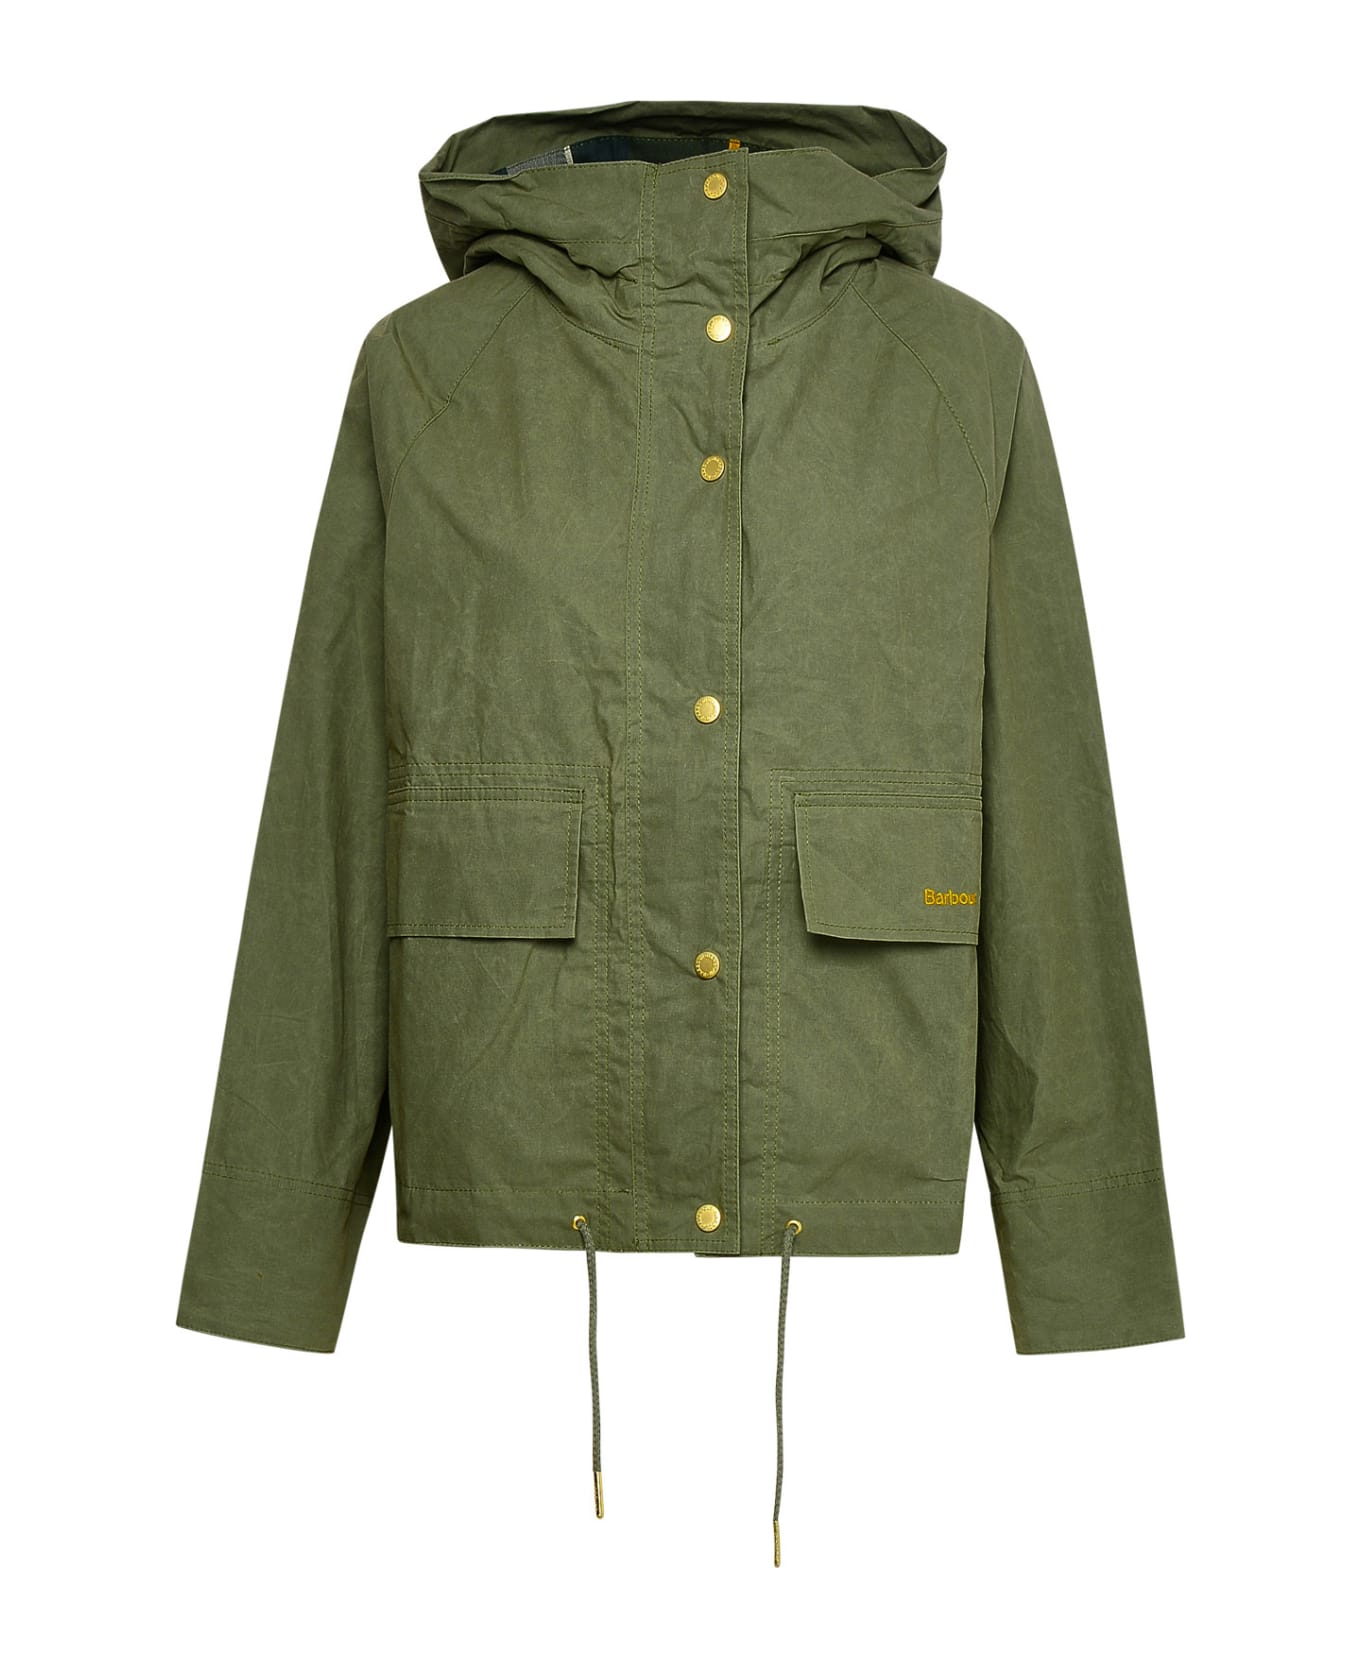 Barbour Green Cotton Jacket - Verde